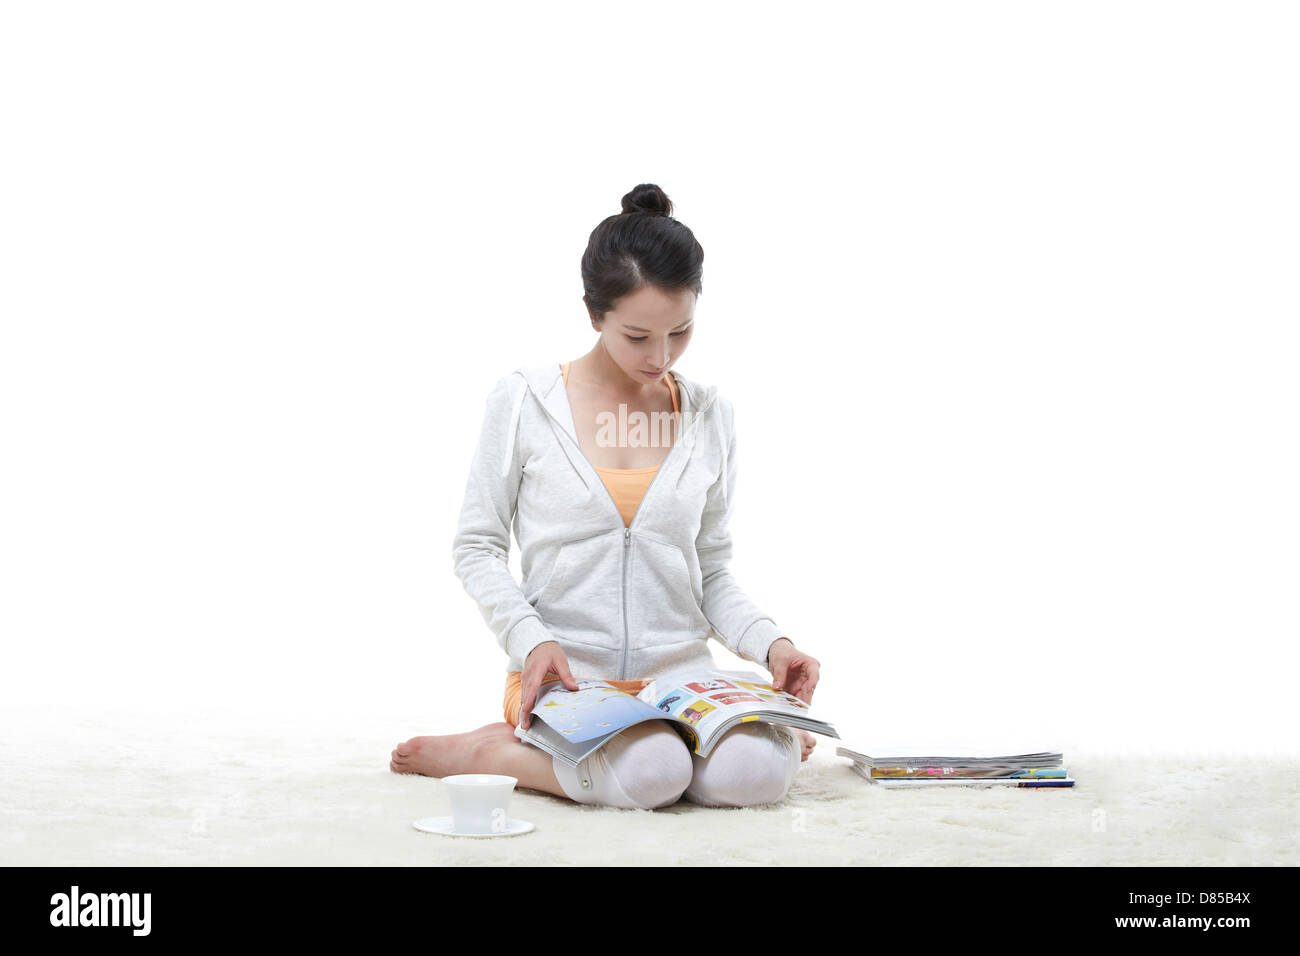 young woman sitting reading magazine. Stock Photo